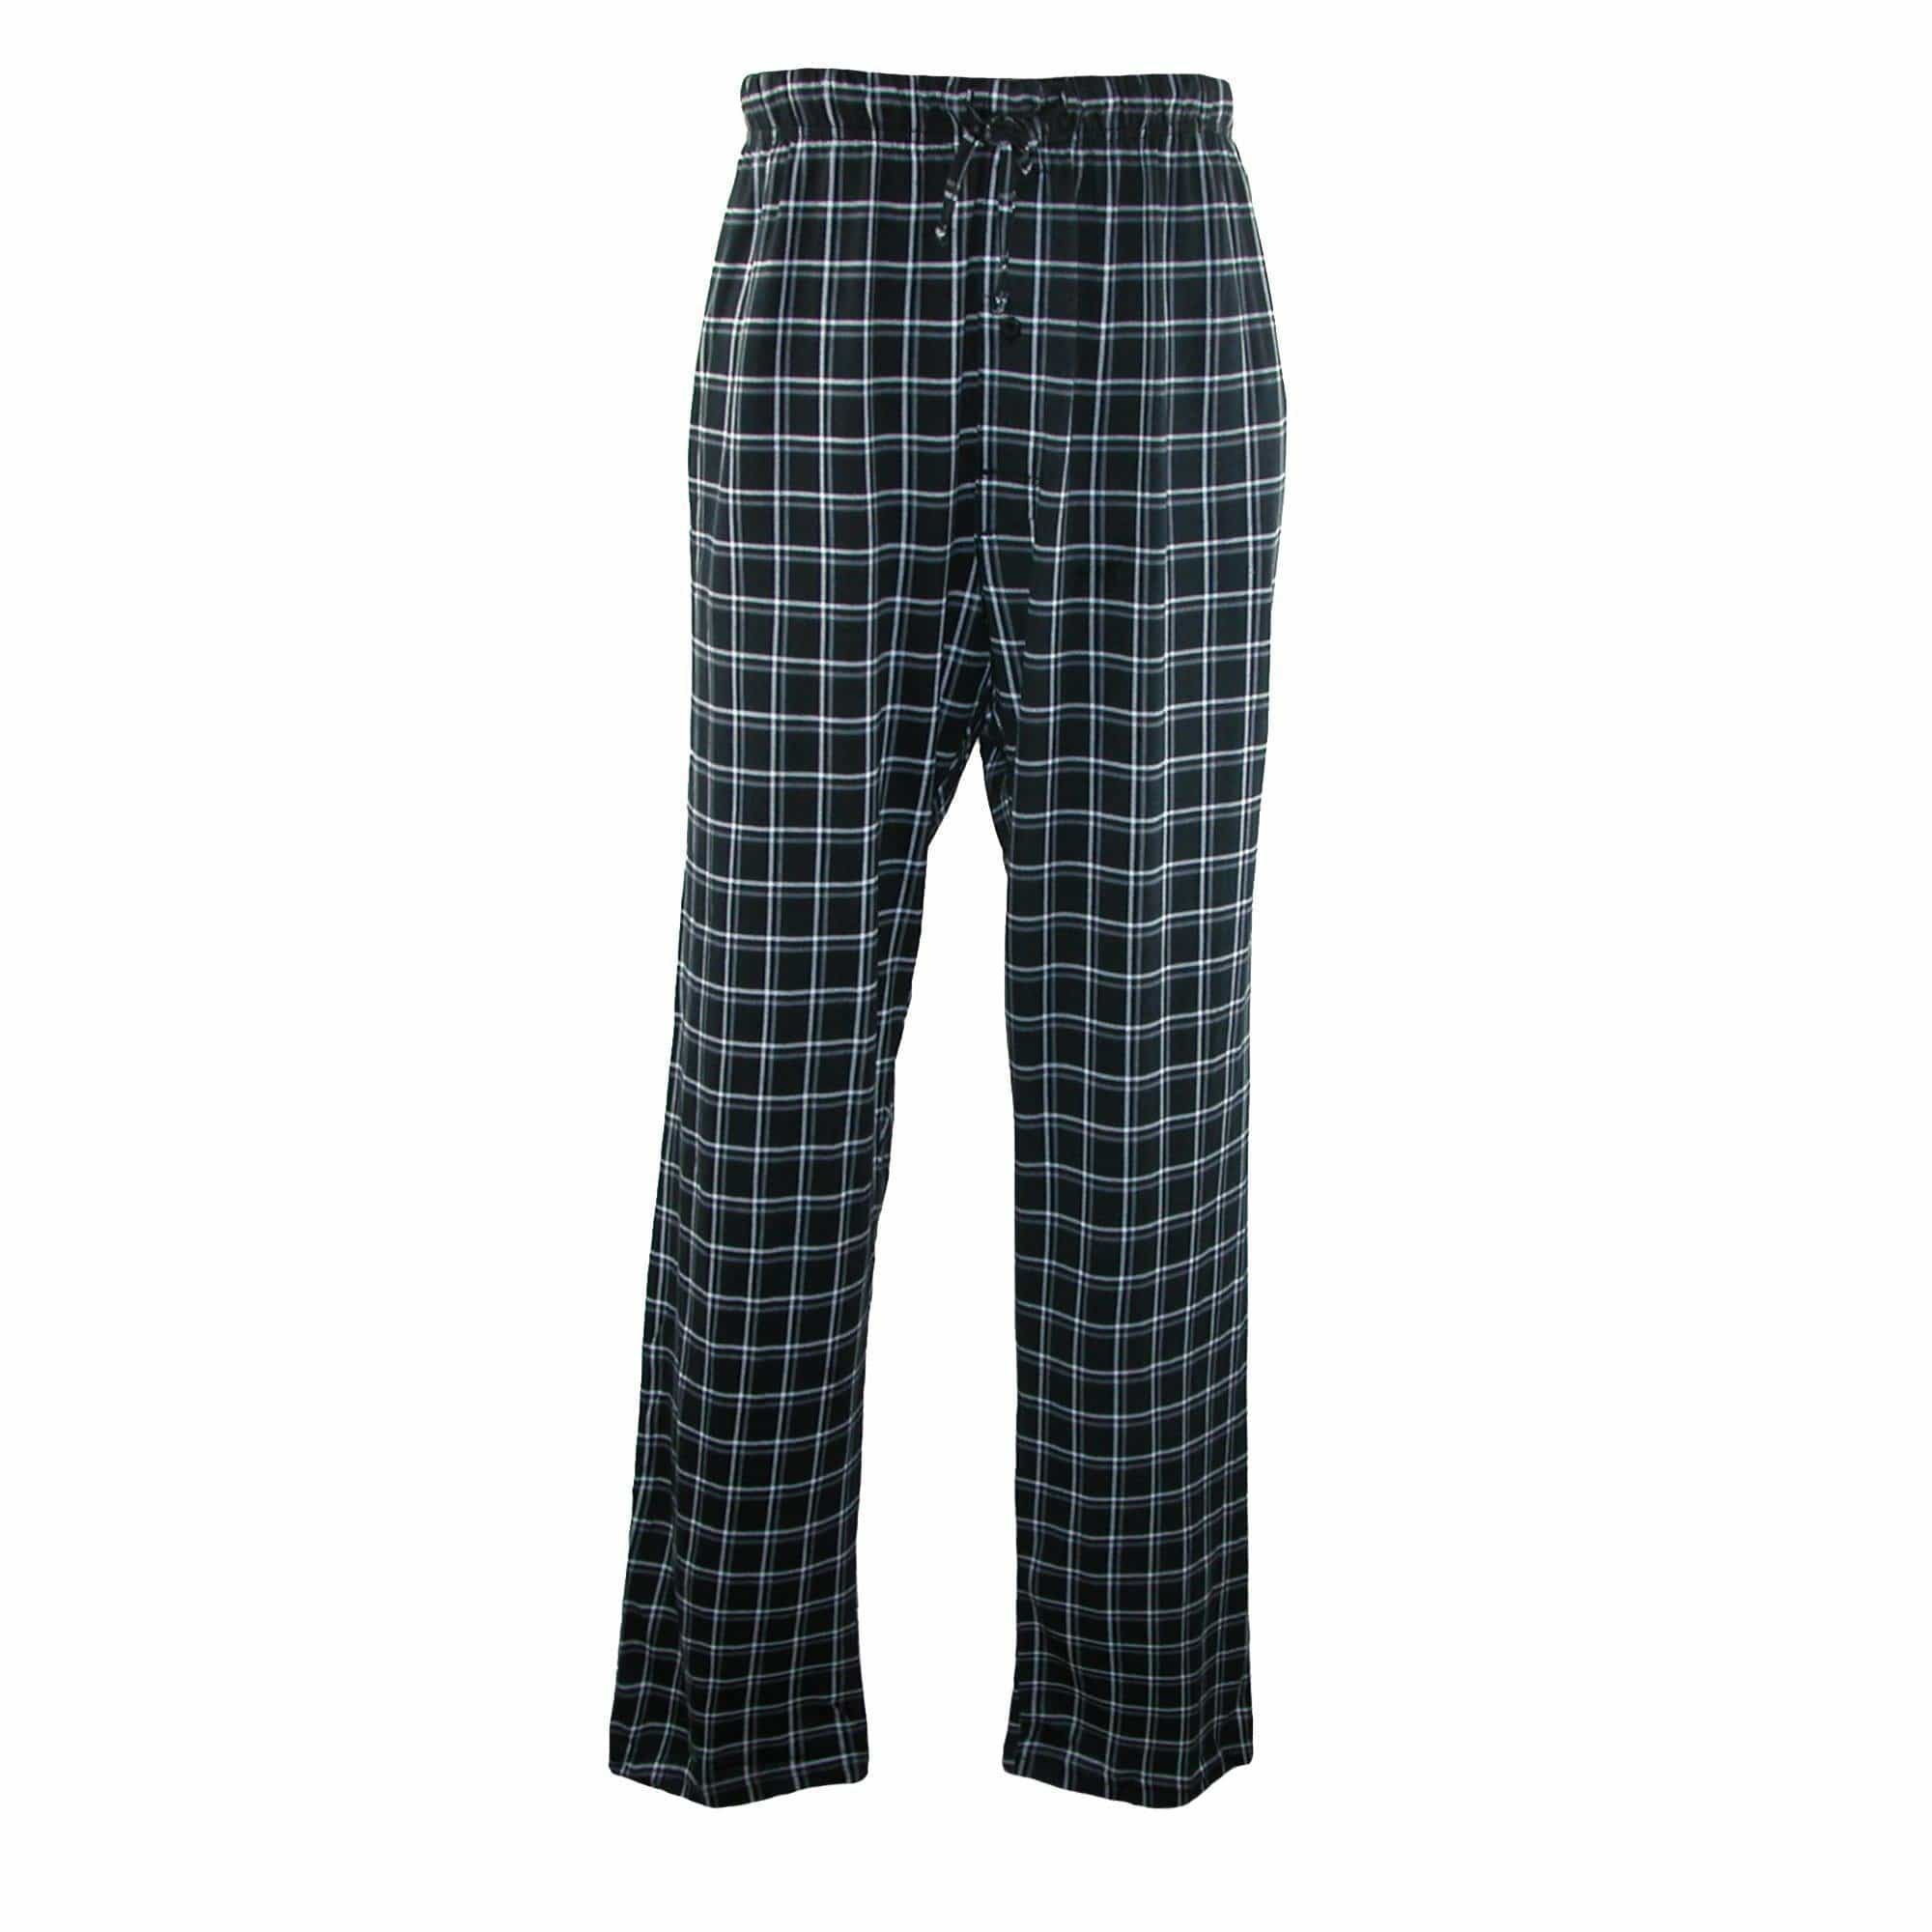 Men's Cotton ComfortSoft Printed Knit Pants by Hanes | Pajama Bottoms ...